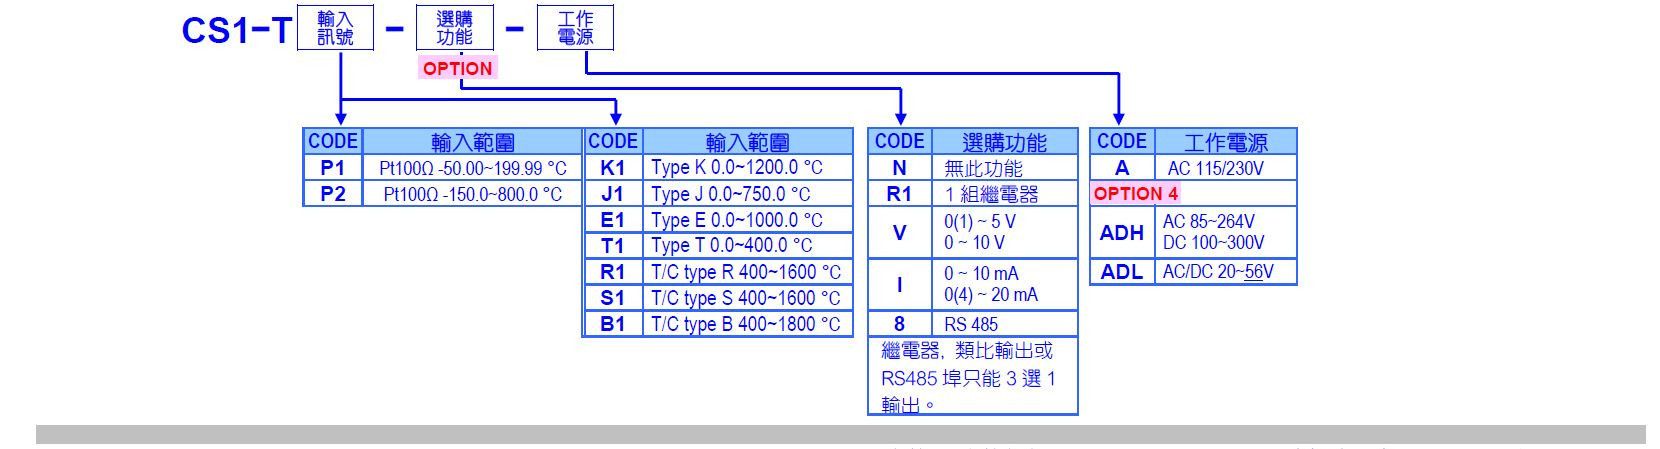 CS1-T 顯示器內文圖2.JPG